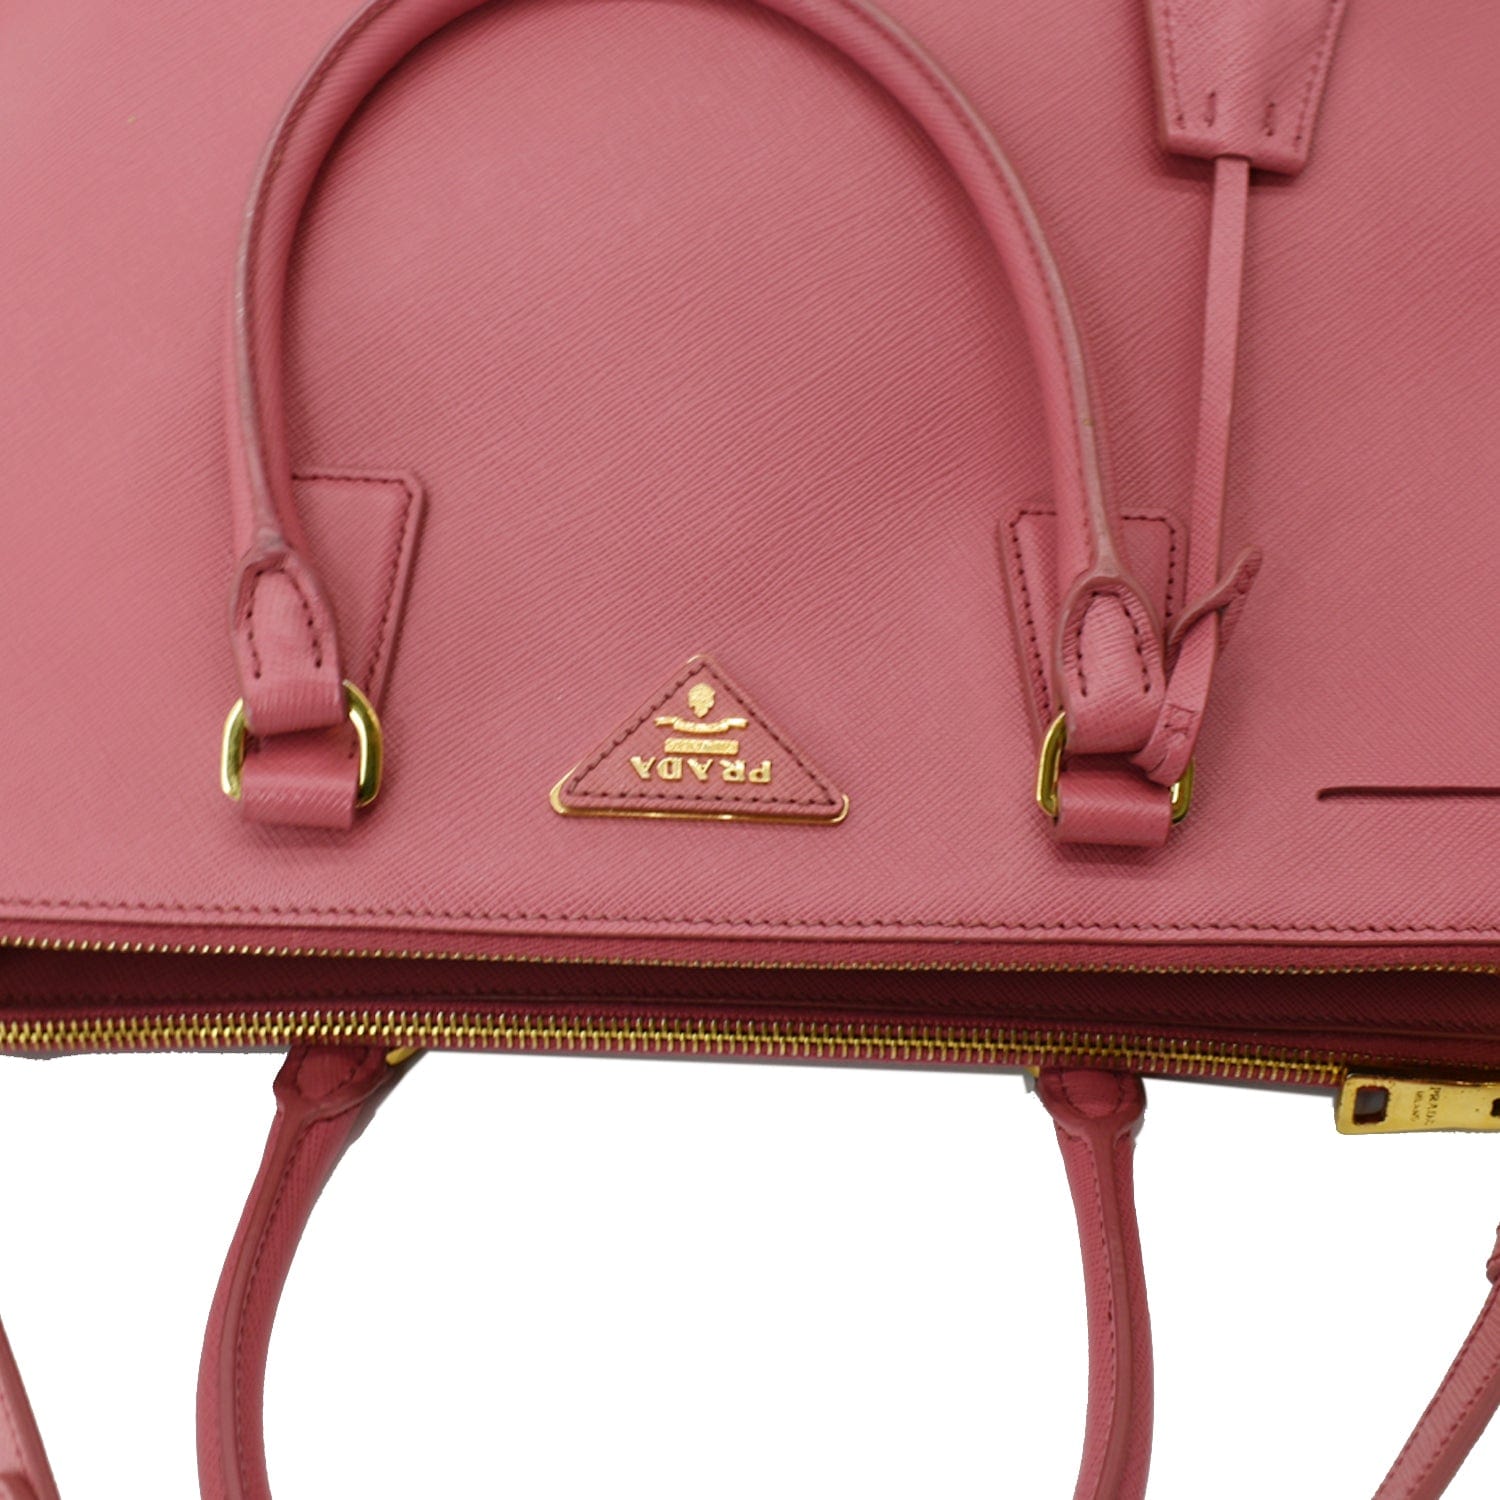 PRADA Galleria Large Double Zip Saffiano Leather Tote Bag Petal Pink 